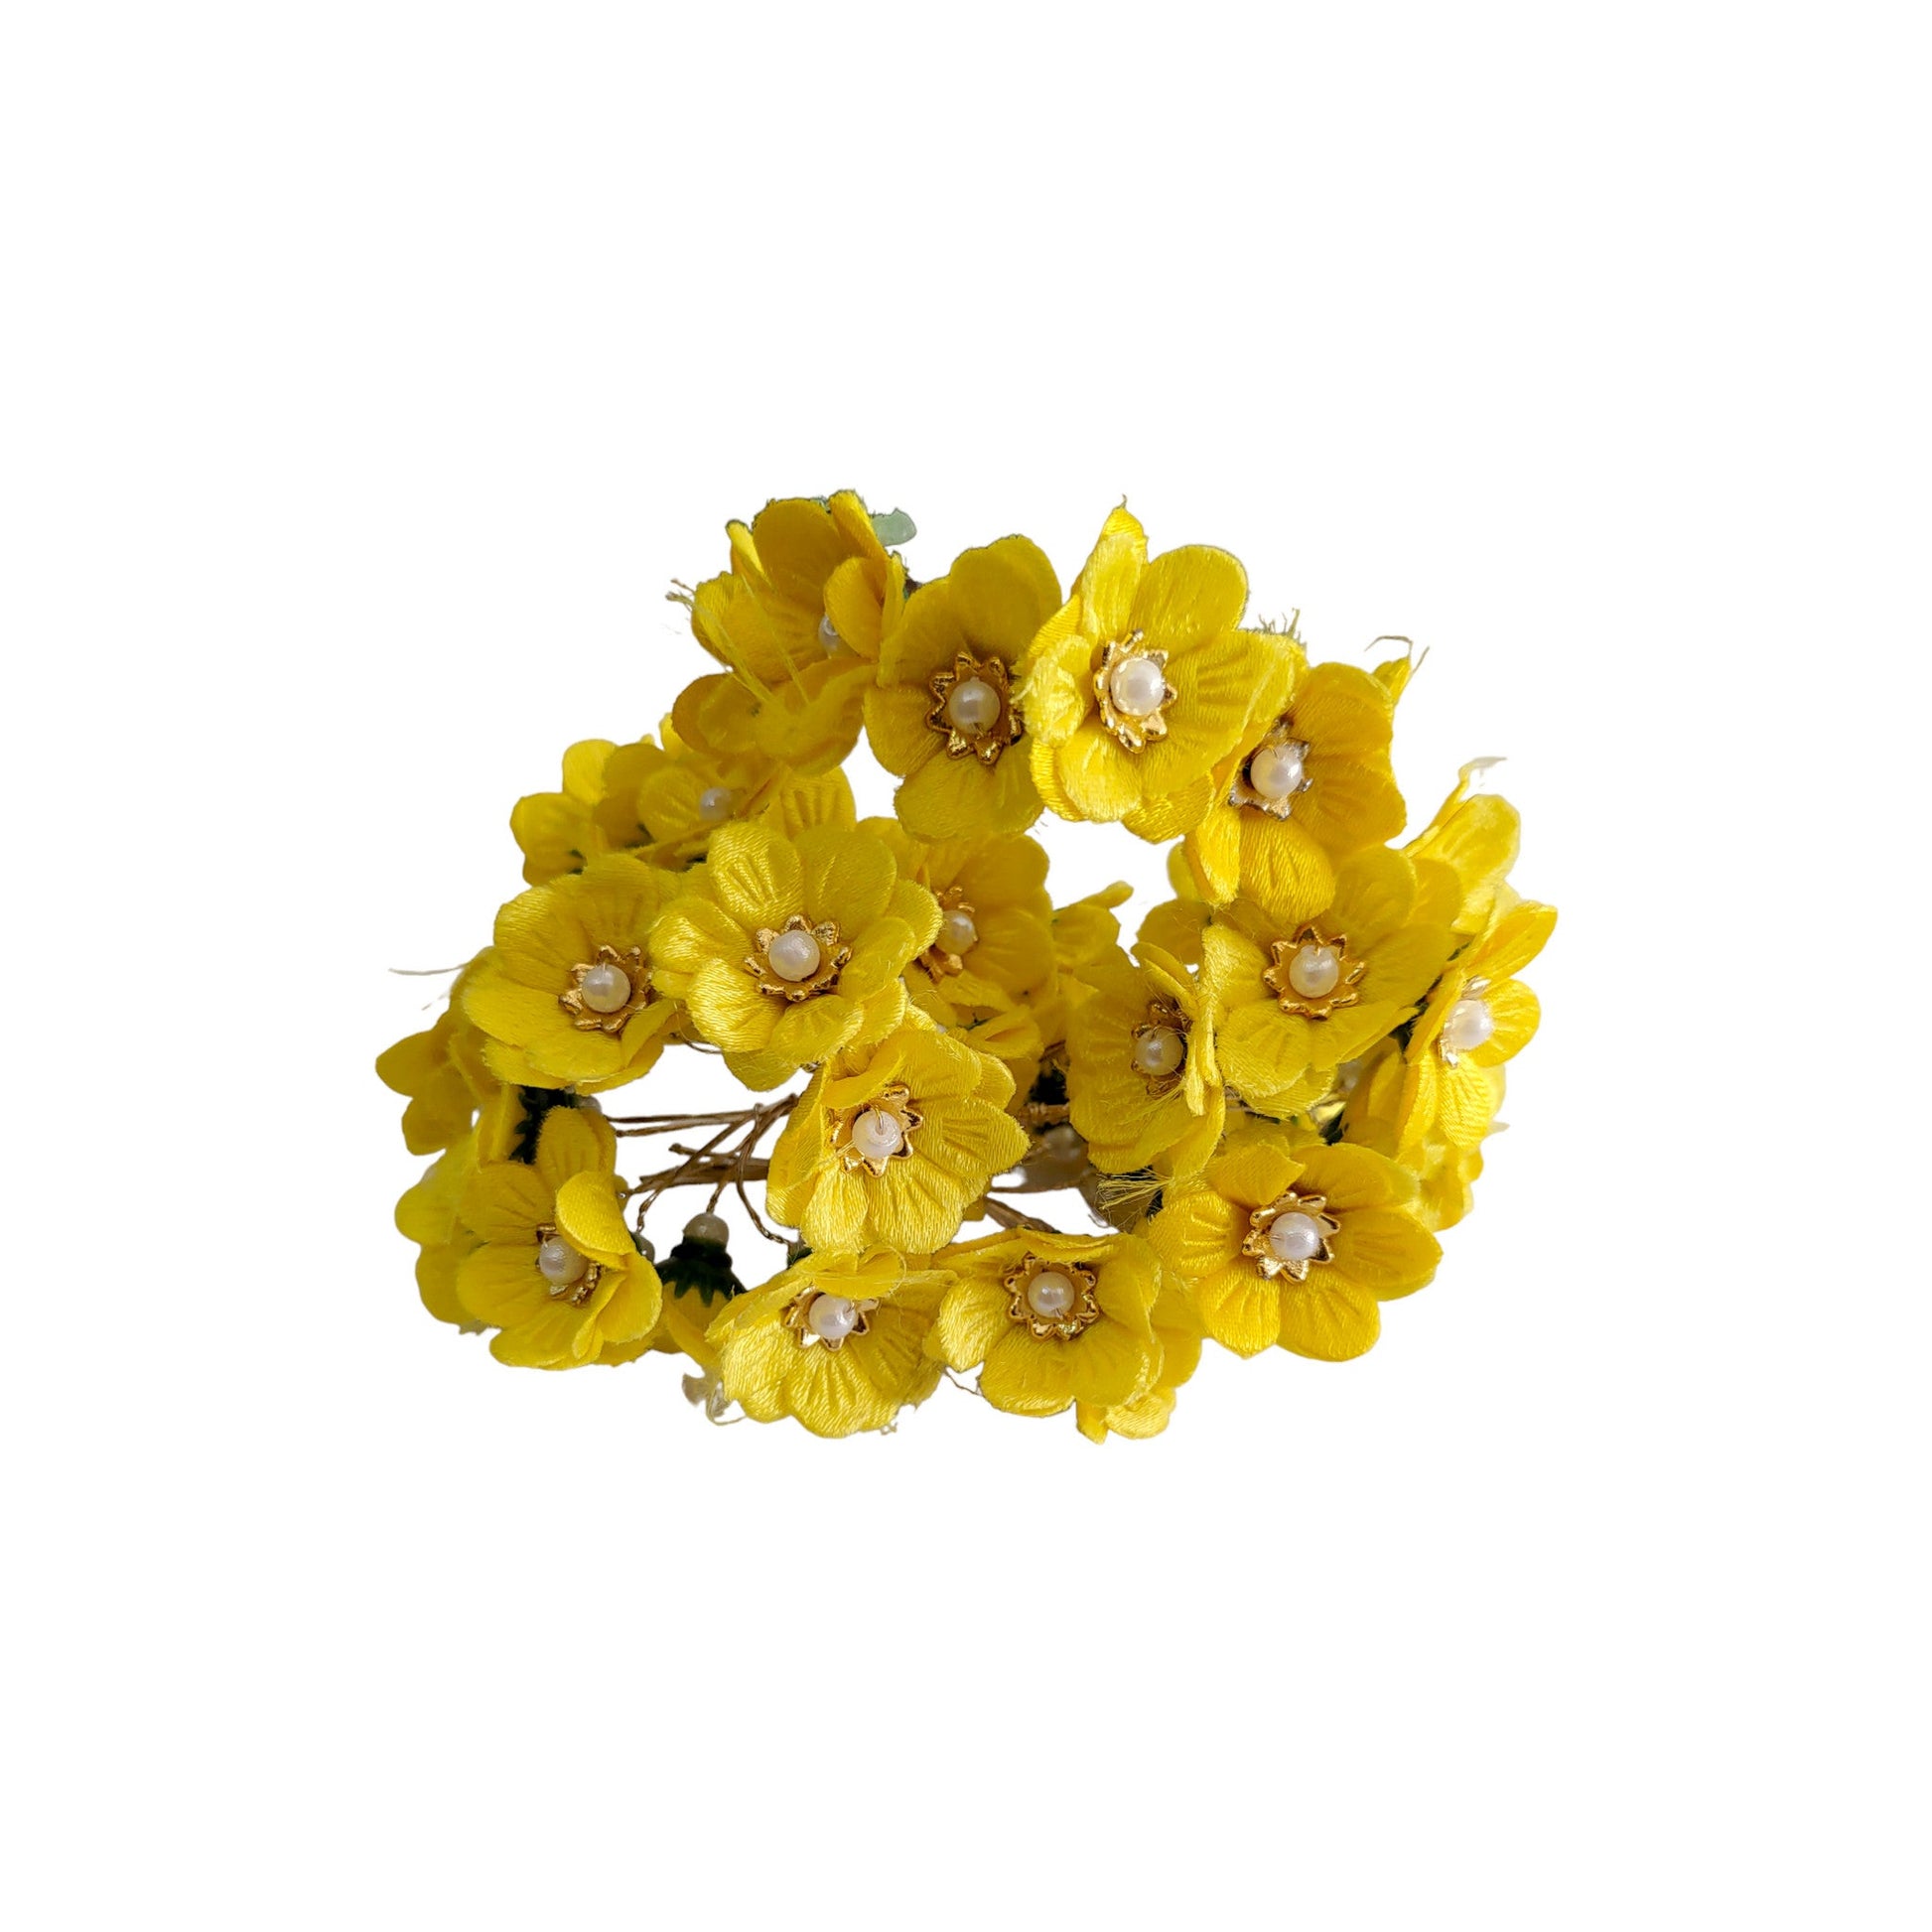 Decorative Artificial Primrose Fabric Flower for Decor, Craft or Textile, 60Pcs -11134, Yellow